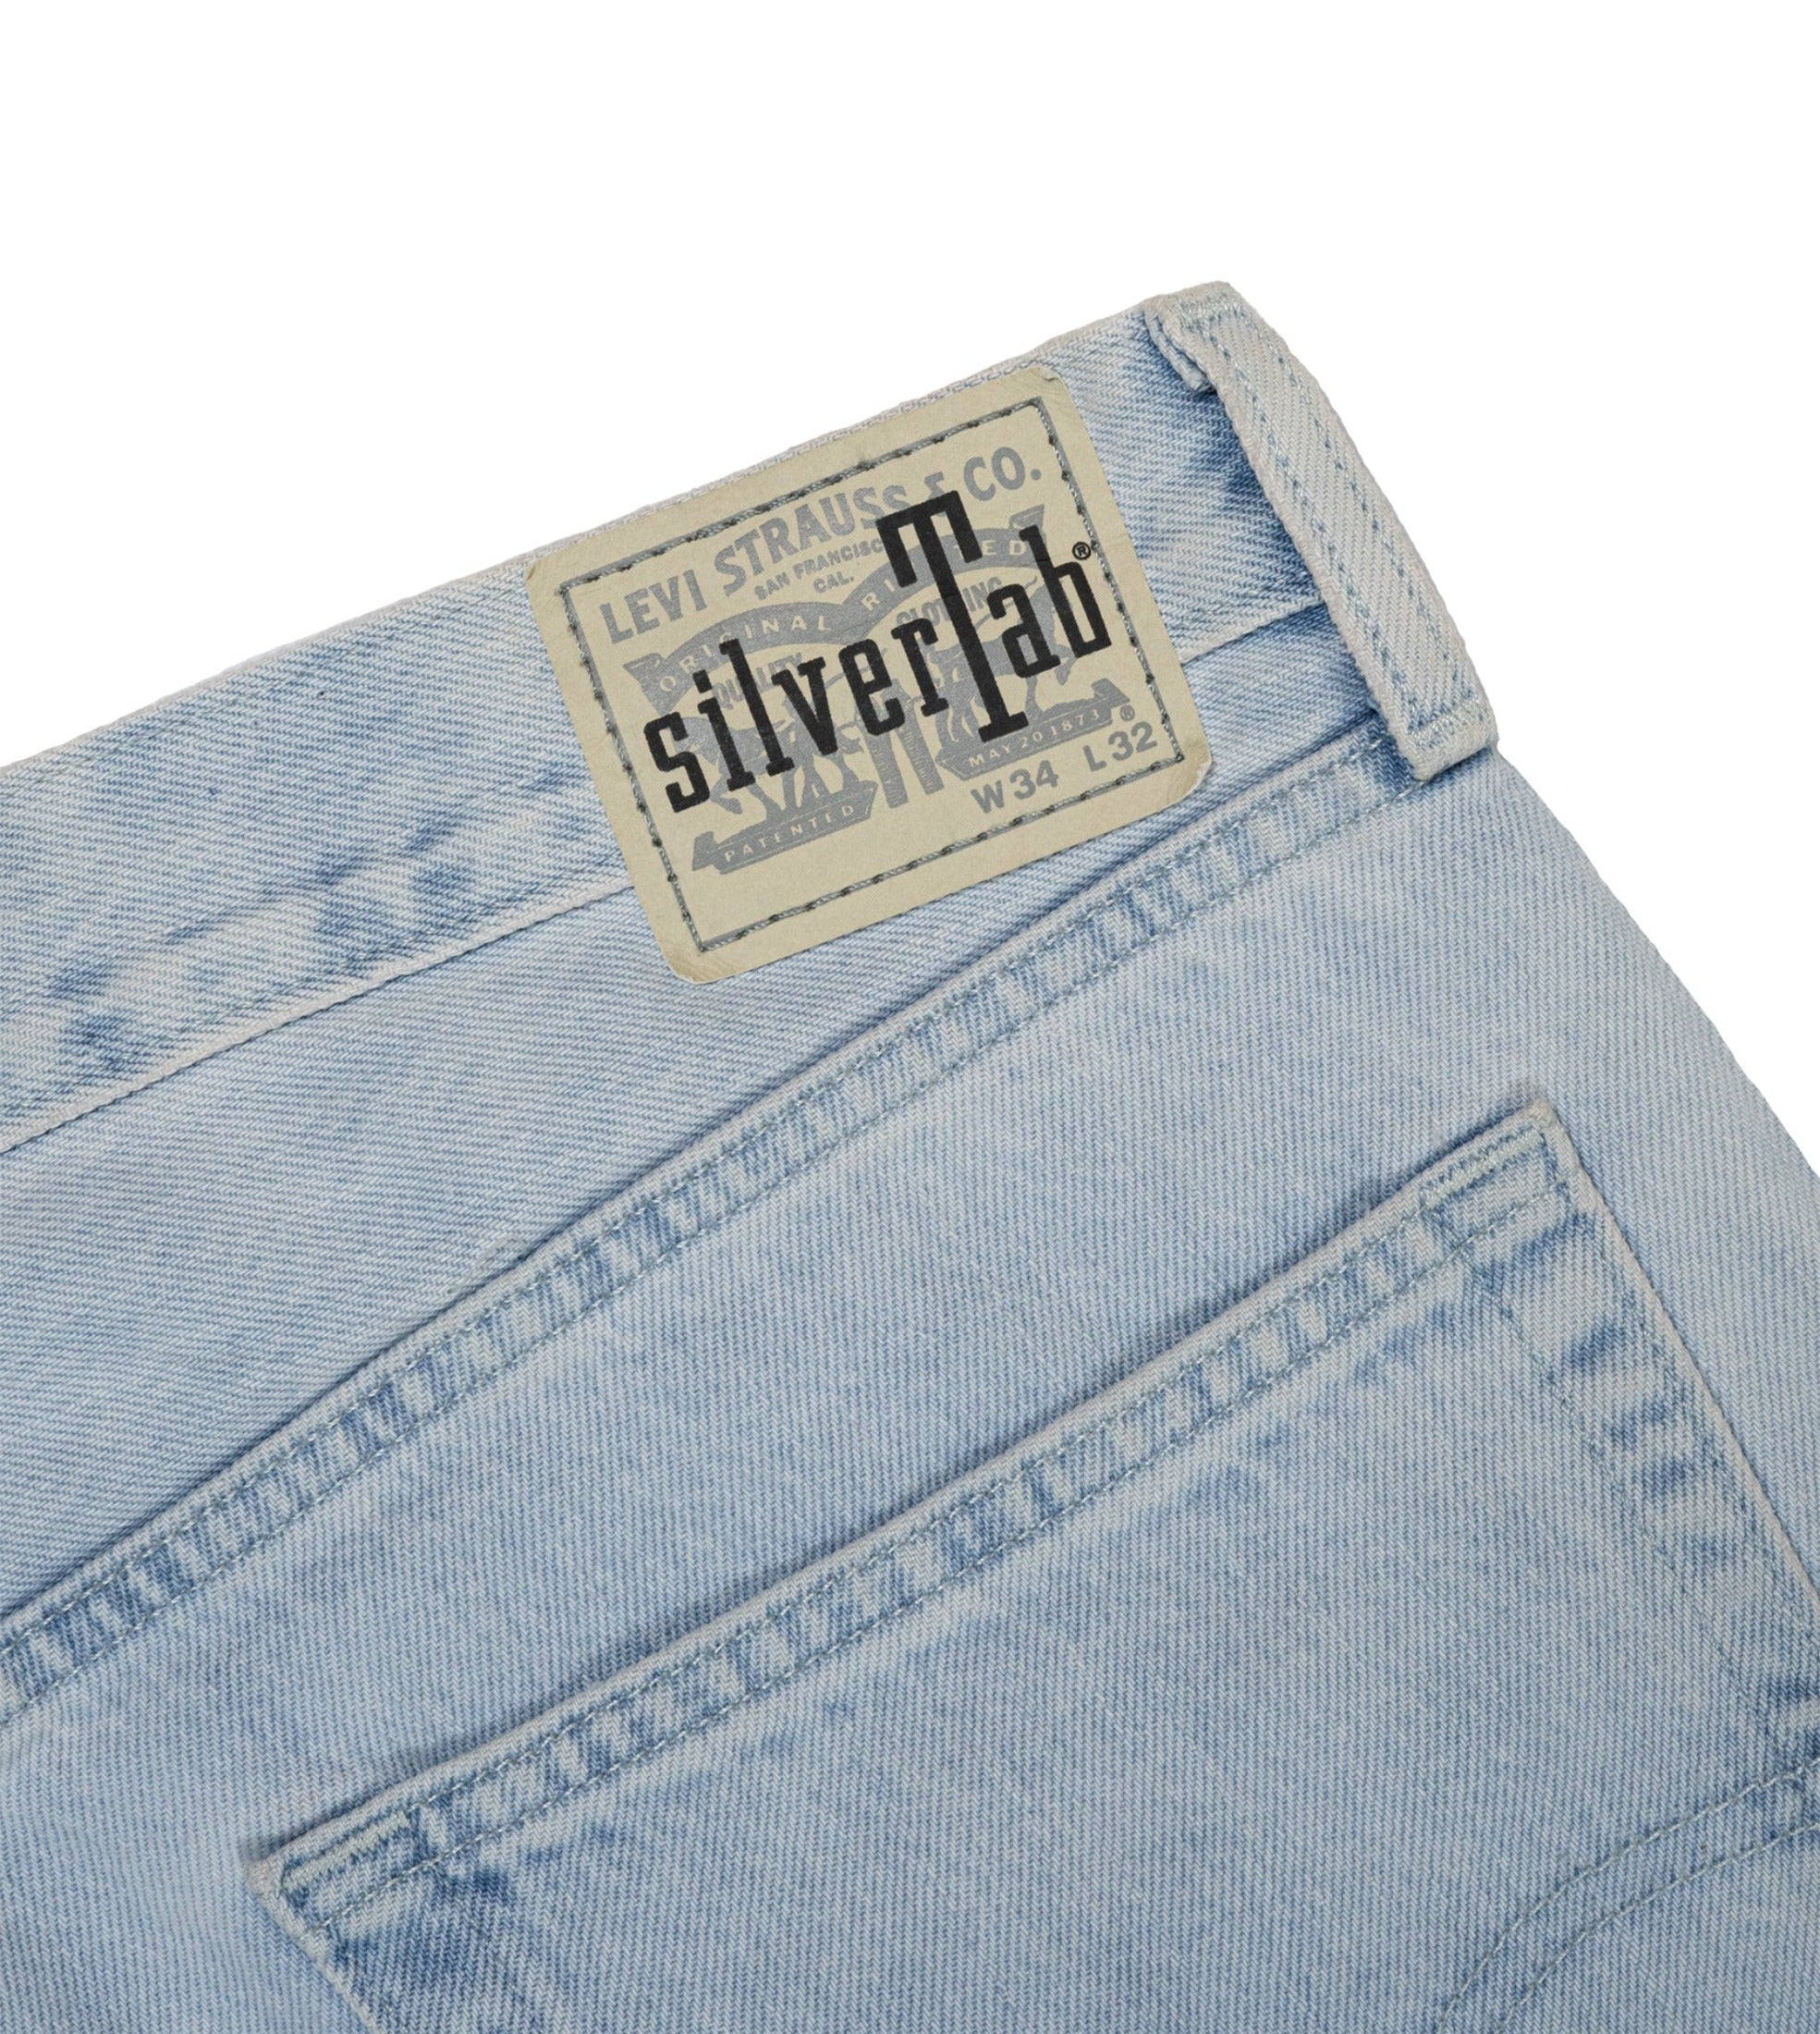 Chota Reworked Denim: SilverTab Jeans, Light Wash - W34